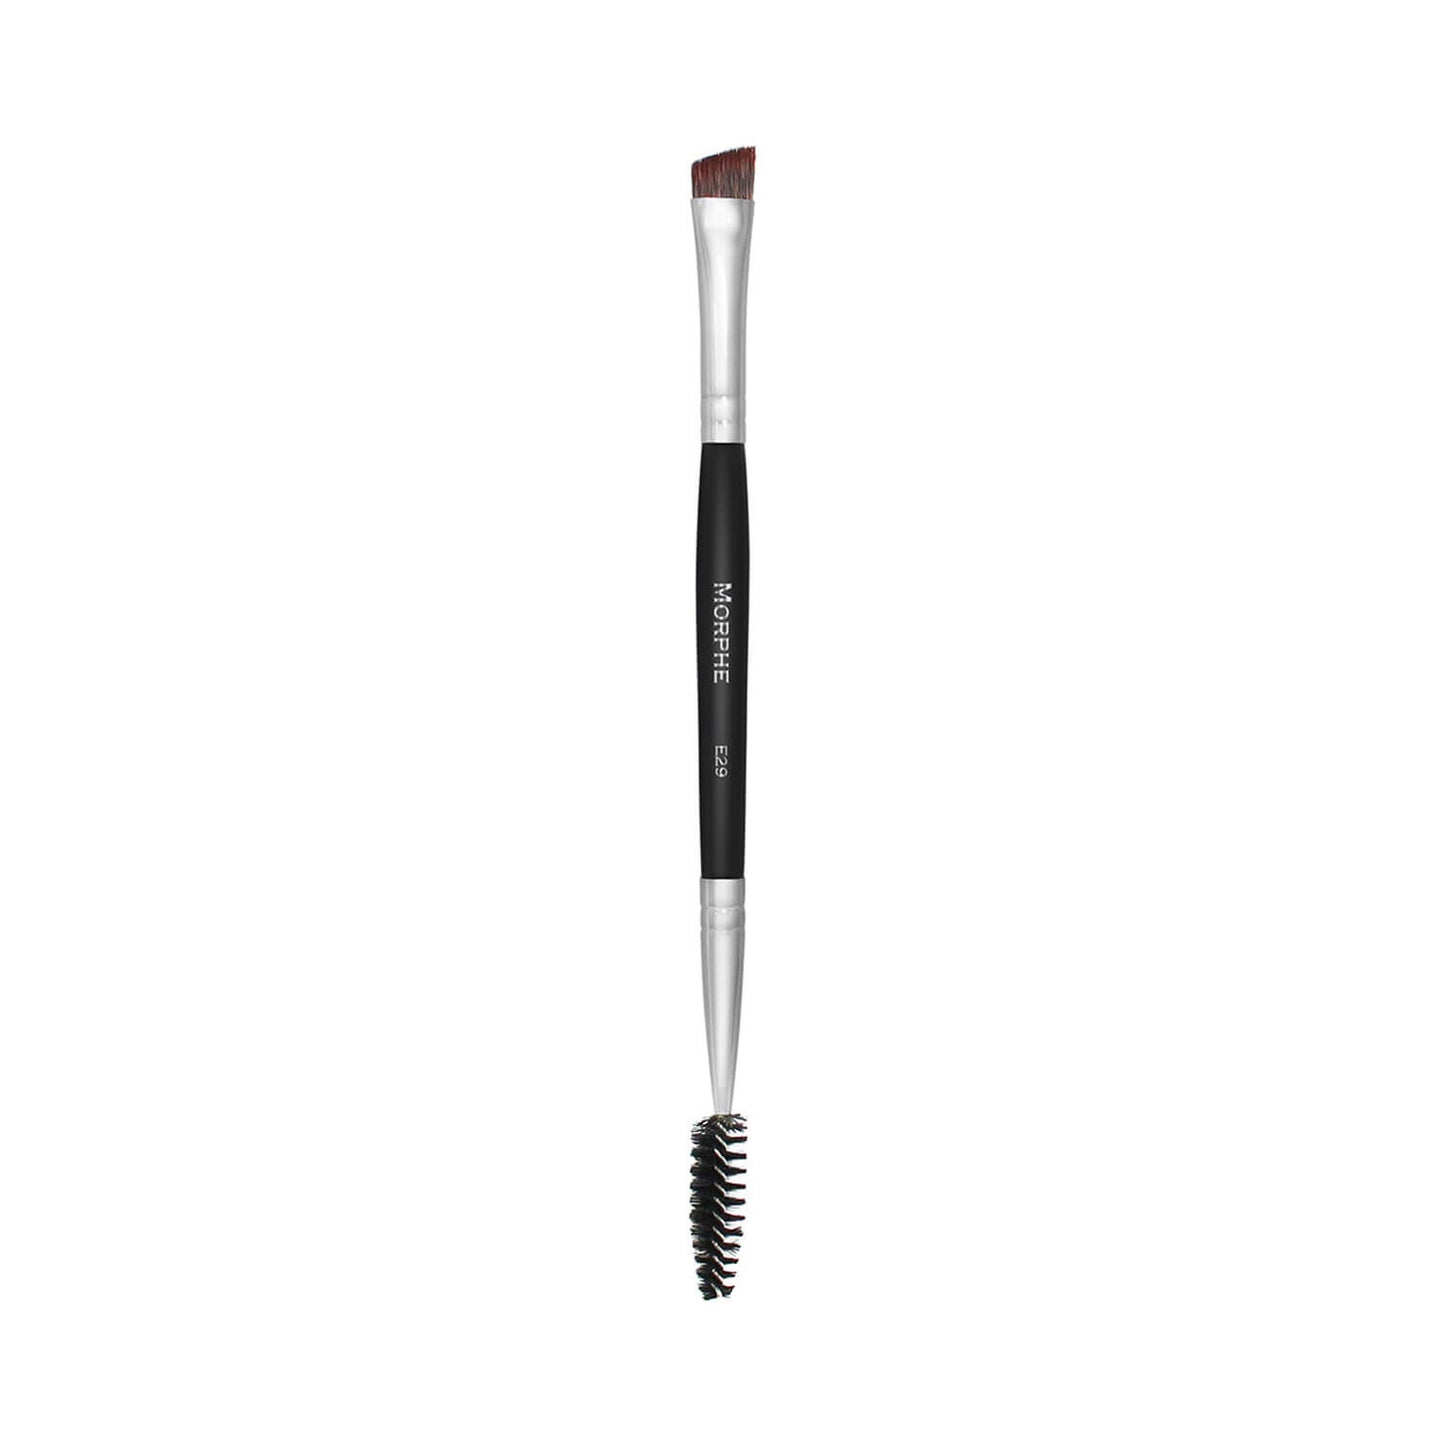 Morphe Cosmetics E29 Angled Brow Spoolie Brush